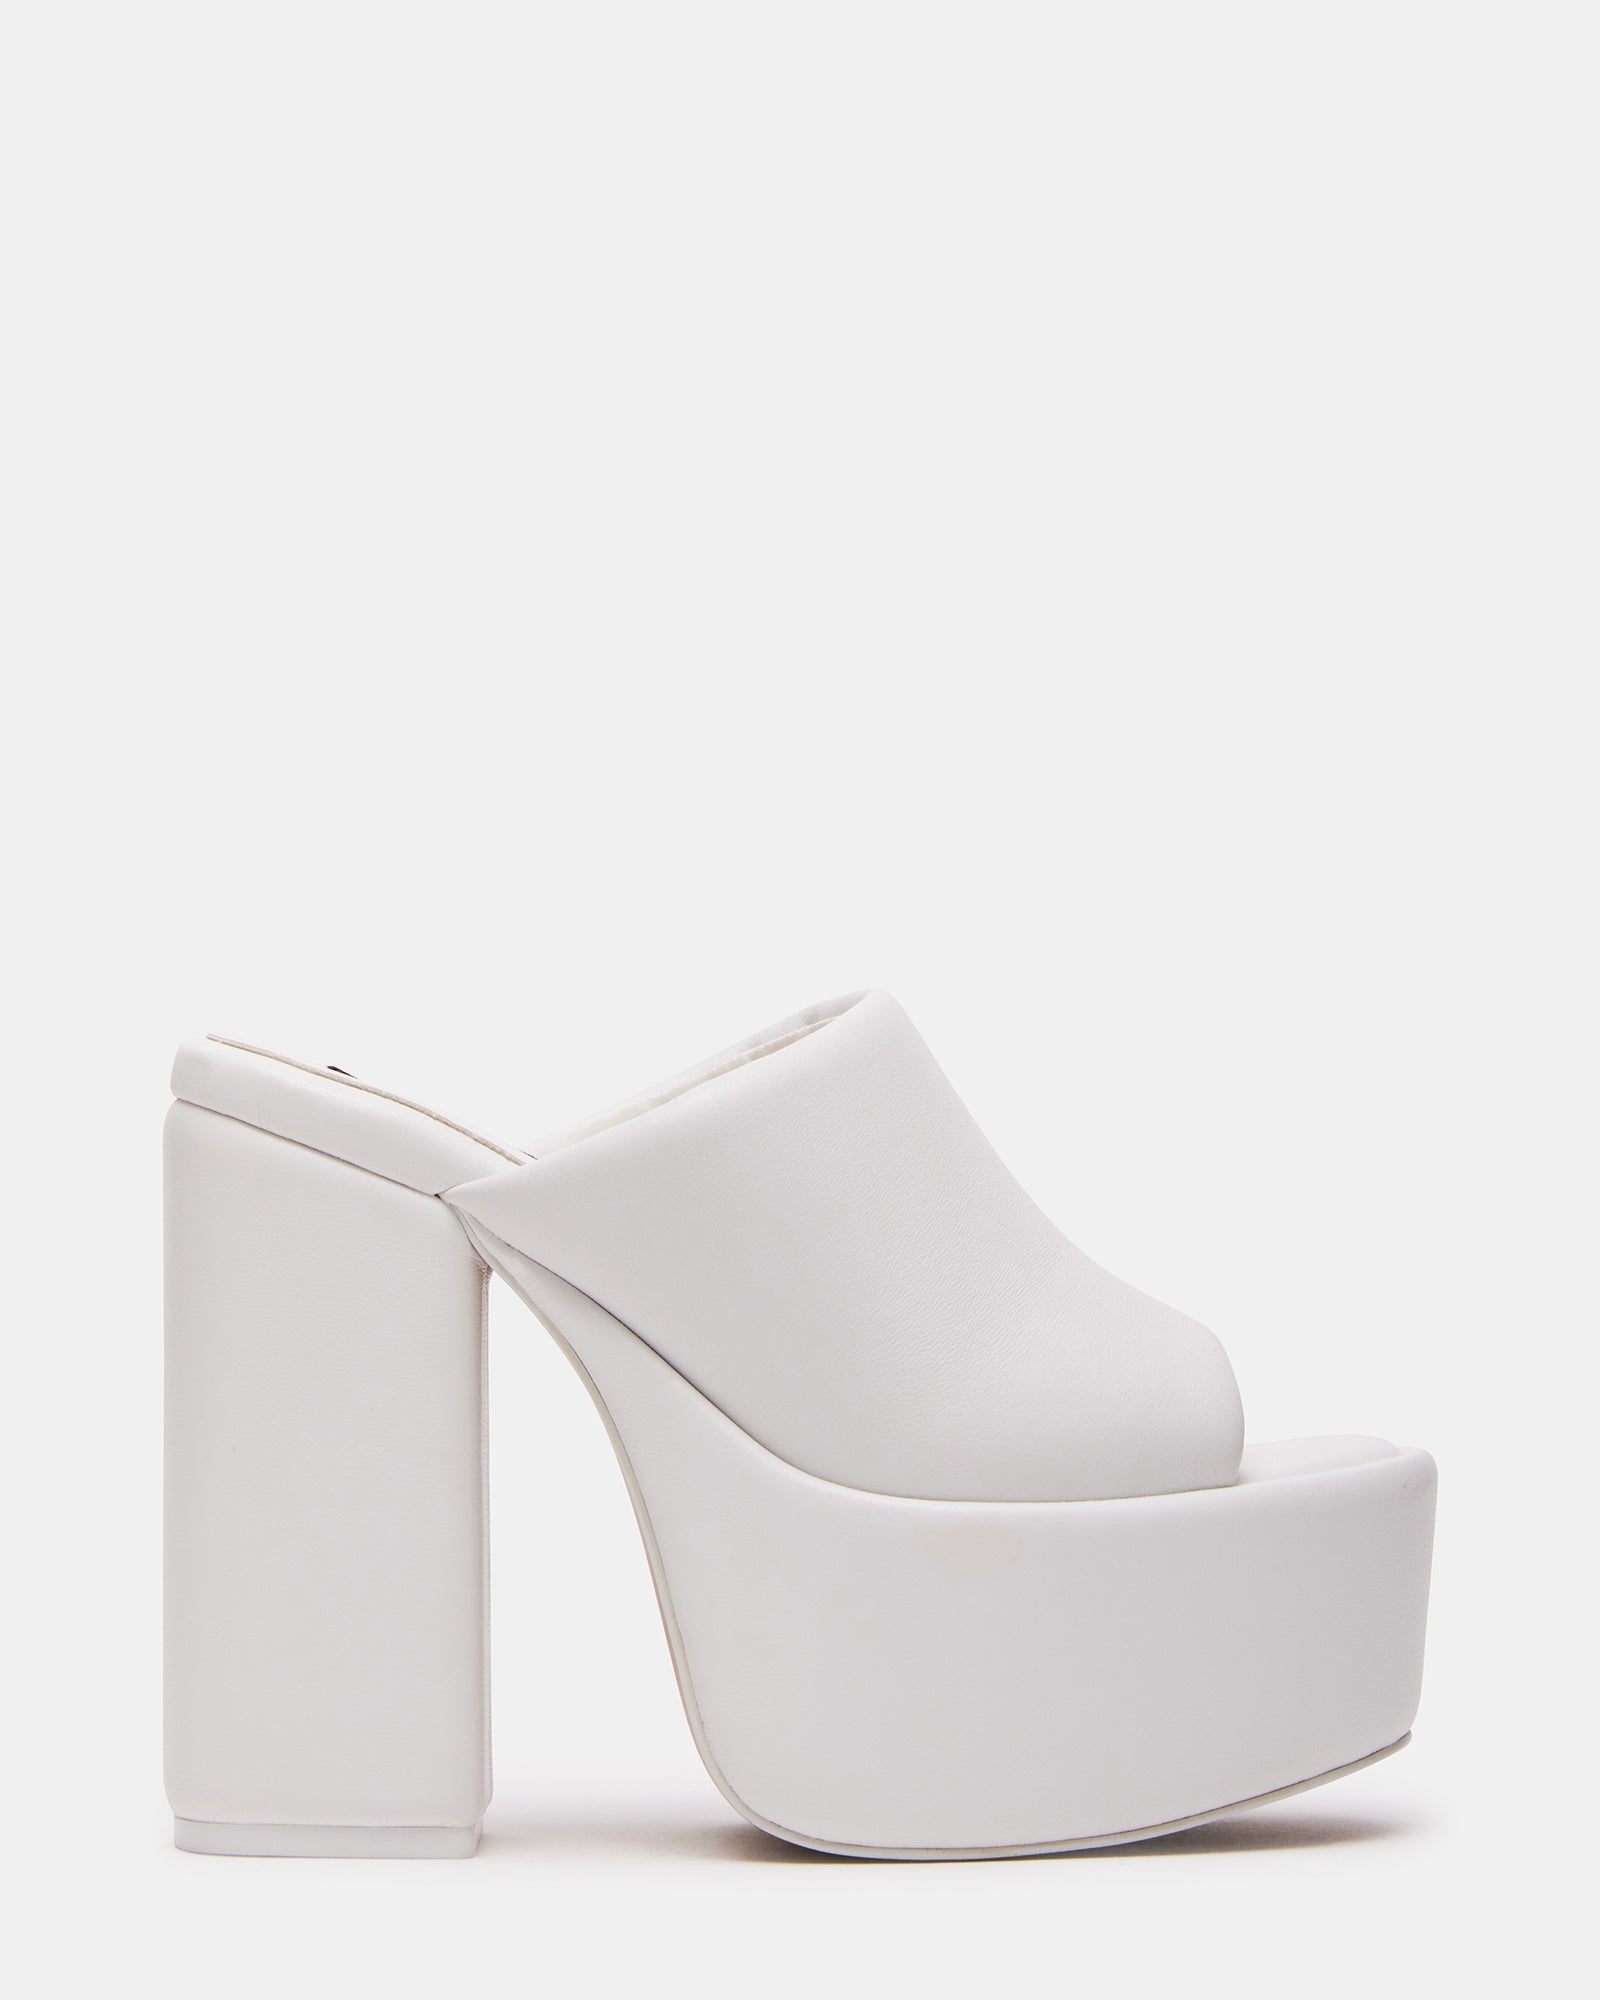 TAMALE White Leather Platform Block Heel Mule| Women's Heels – Steve Madden